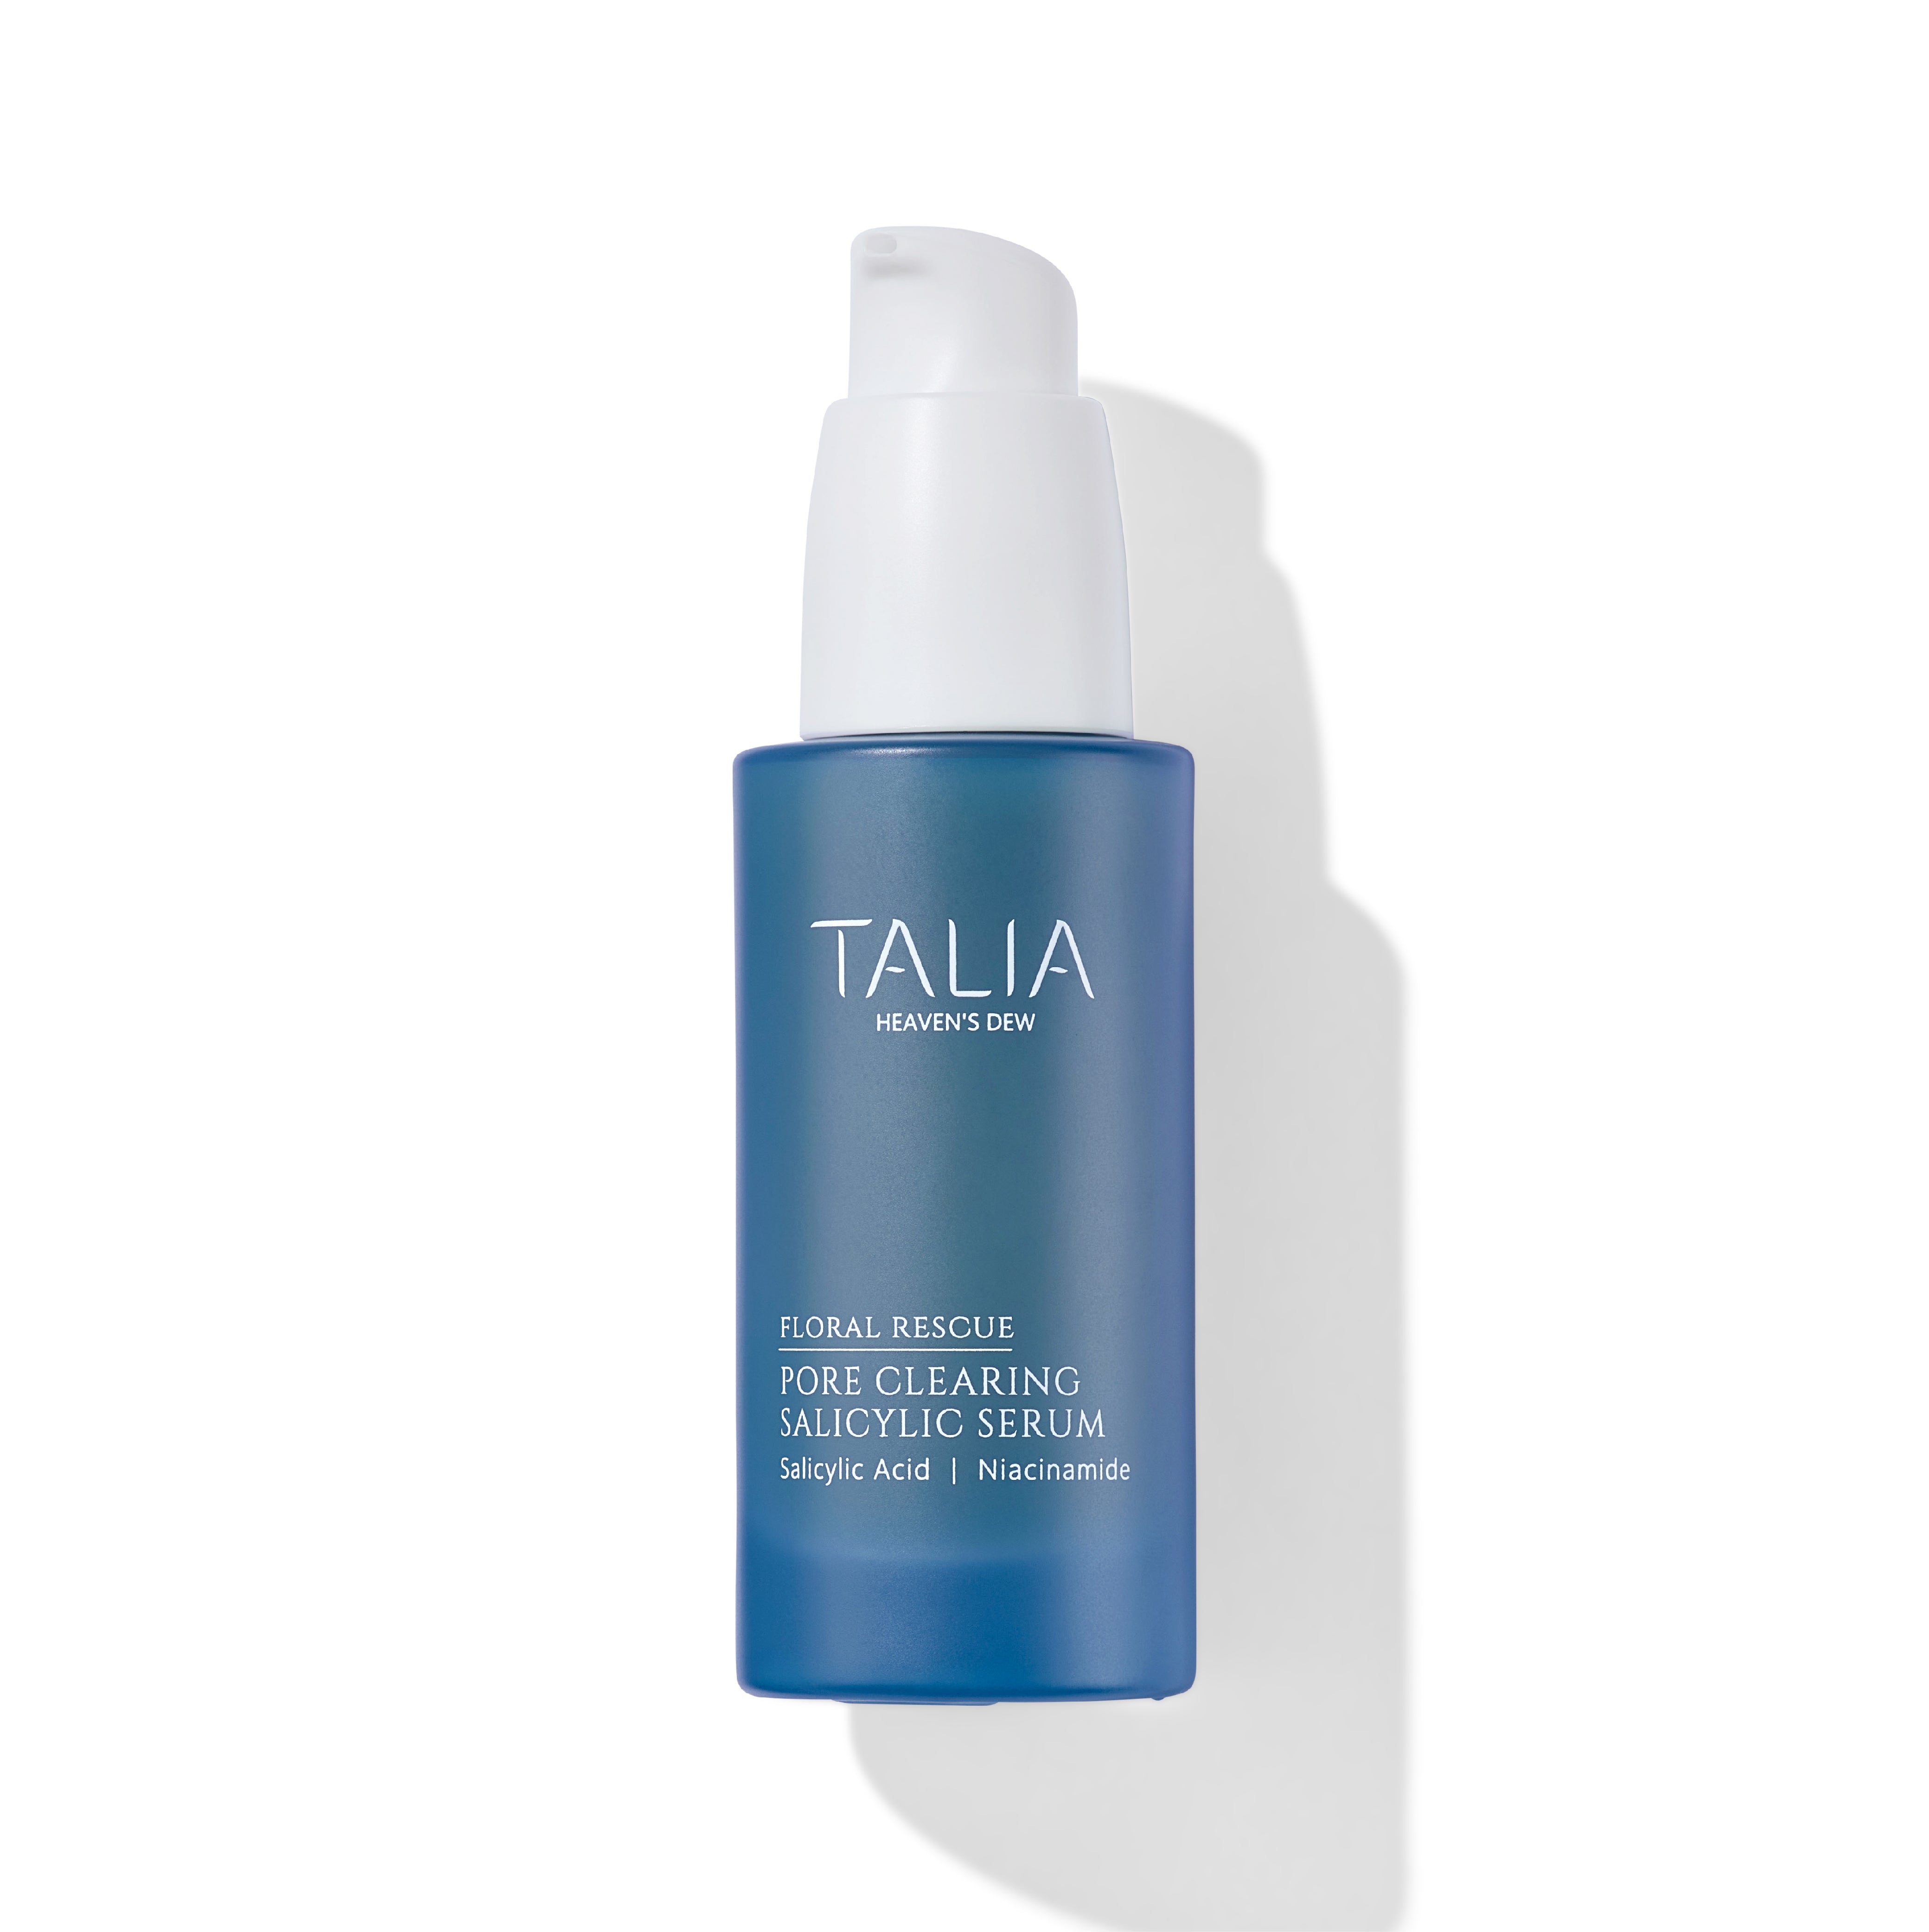 Pore Clearing Salicylic Serum – Talia Heaven's Dew